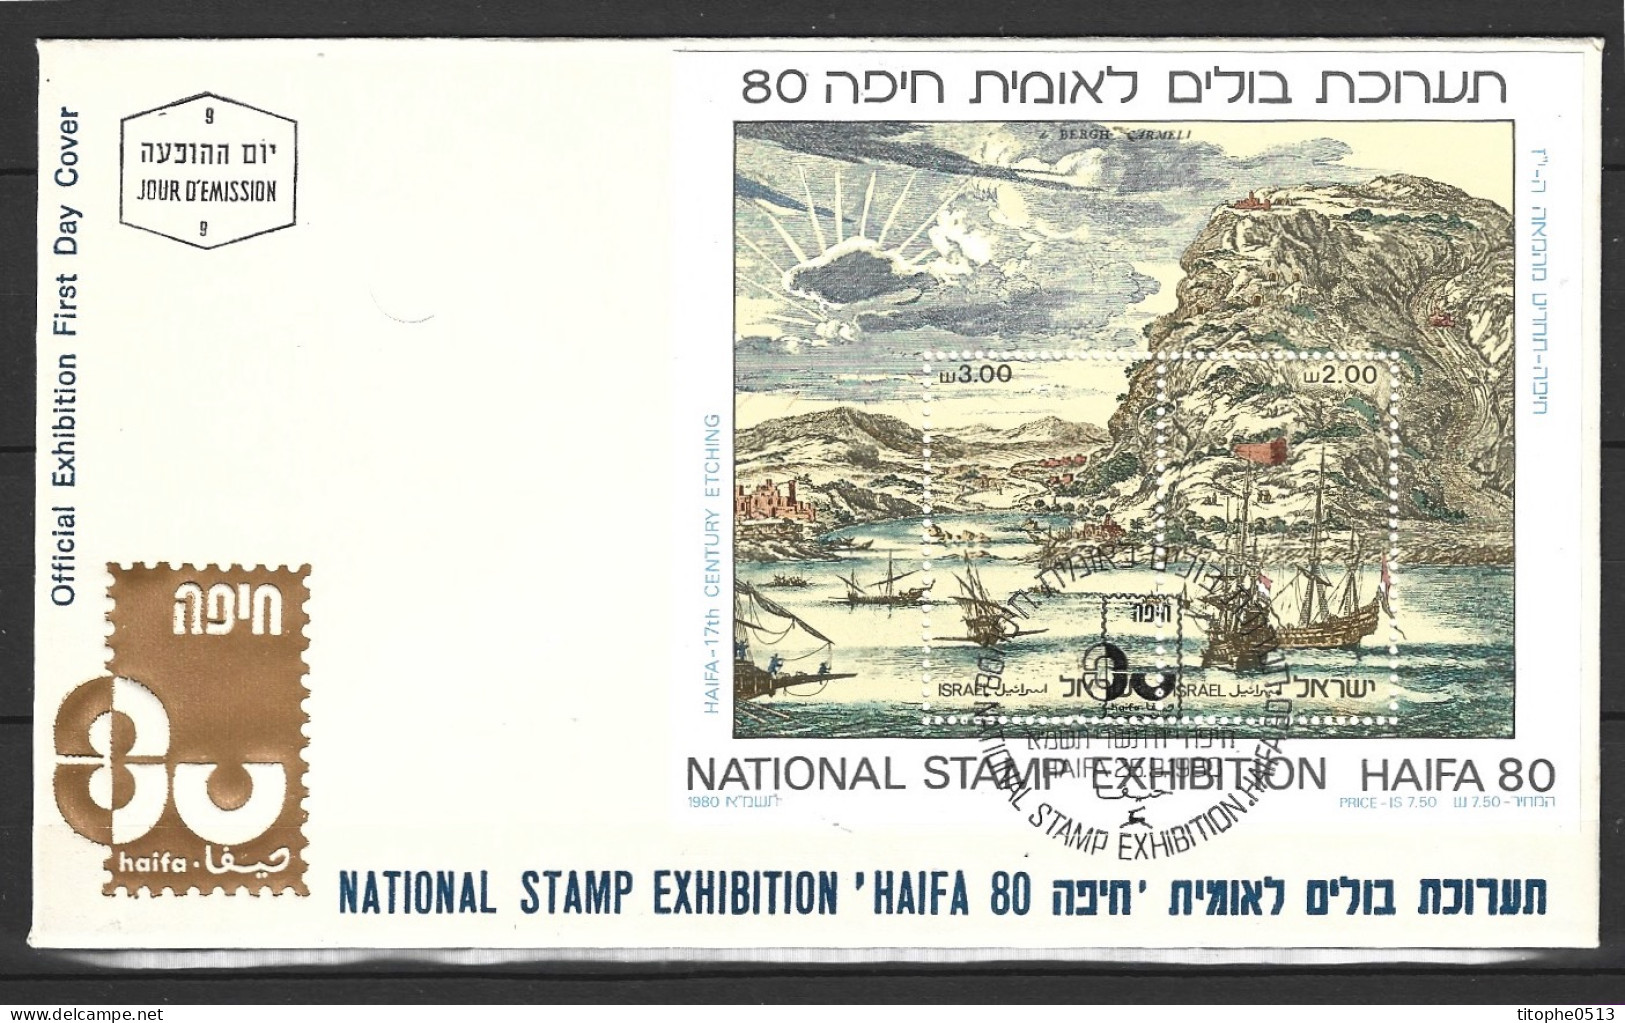 ISRAËL. BF 20 De 1980 Sur Enveloppe 1er Jour. Gravure. - Engravings